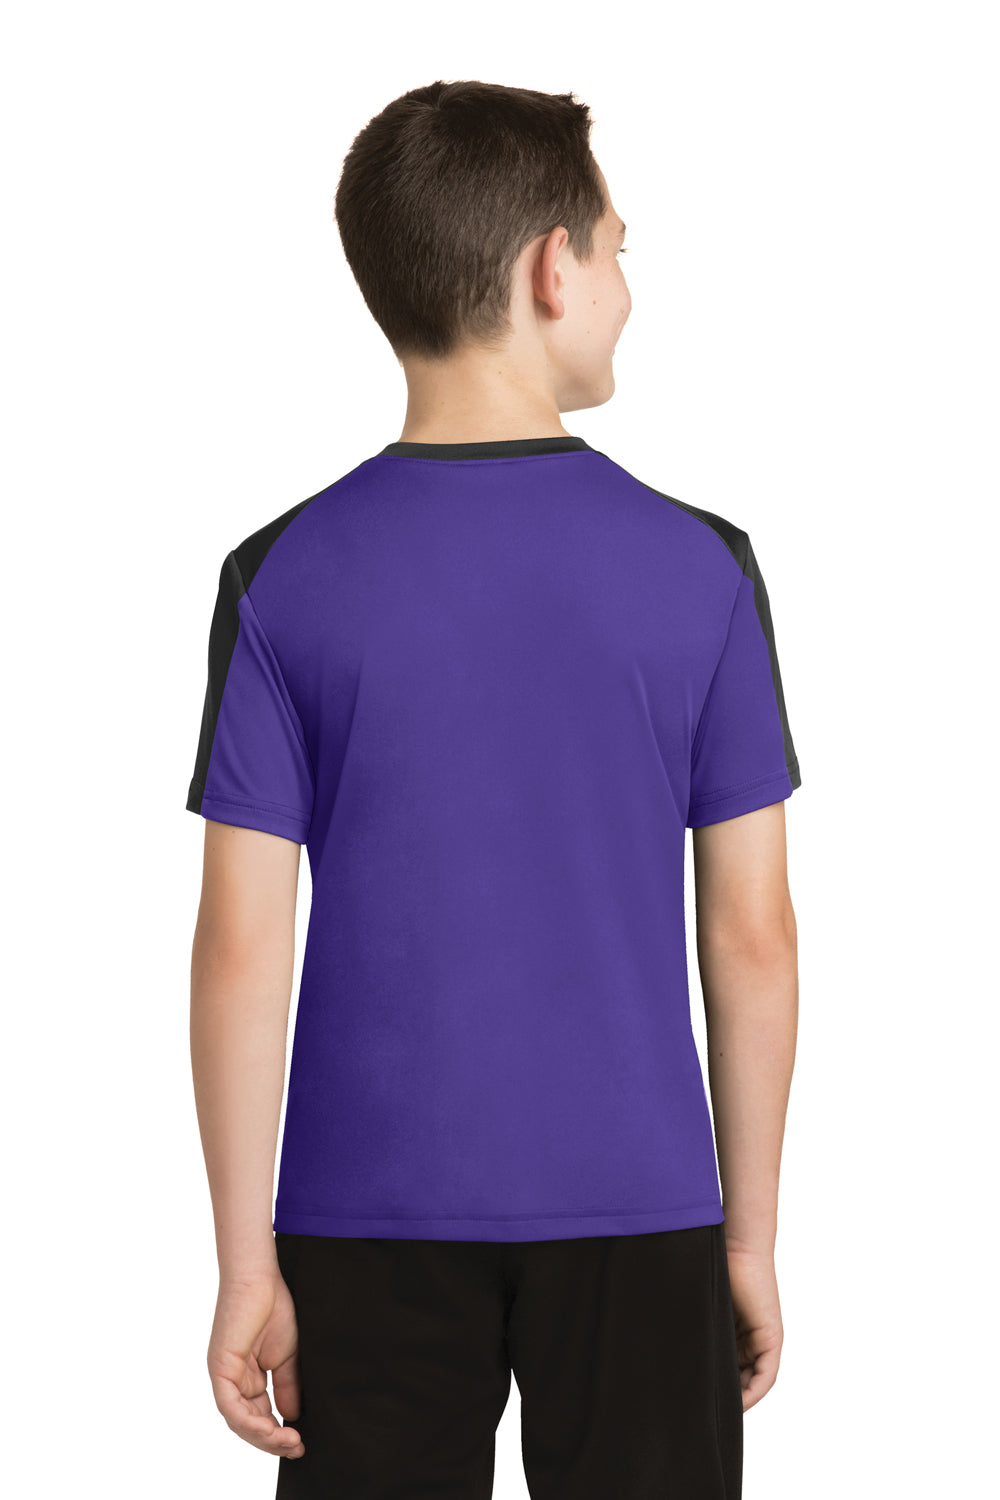 Sport-Tek YST354 Youth Competitor Moisture Wicking Short Sleeve Crewneck T-Shirt Purple/Black Back